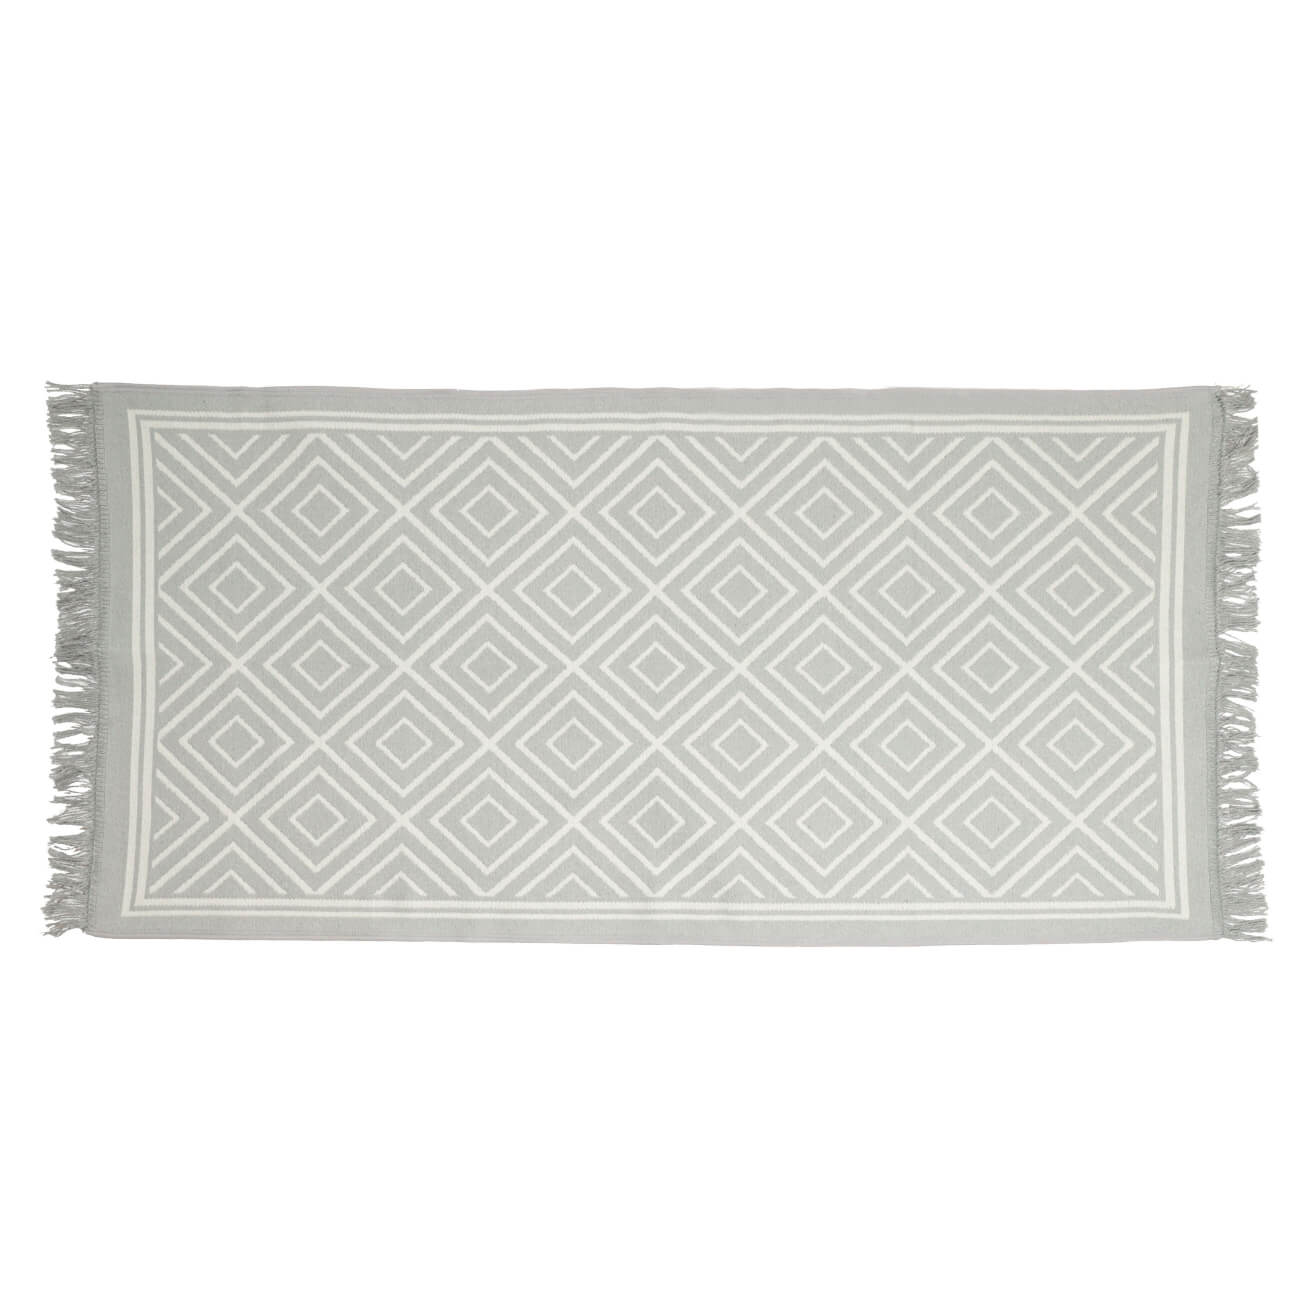 коврик придверный x y carpet коричневый 50х80 см grs04 br2 Коврик, 80х150 см, двусторонний, с бахромой, акрил, бело-серый, Узор, Carpet